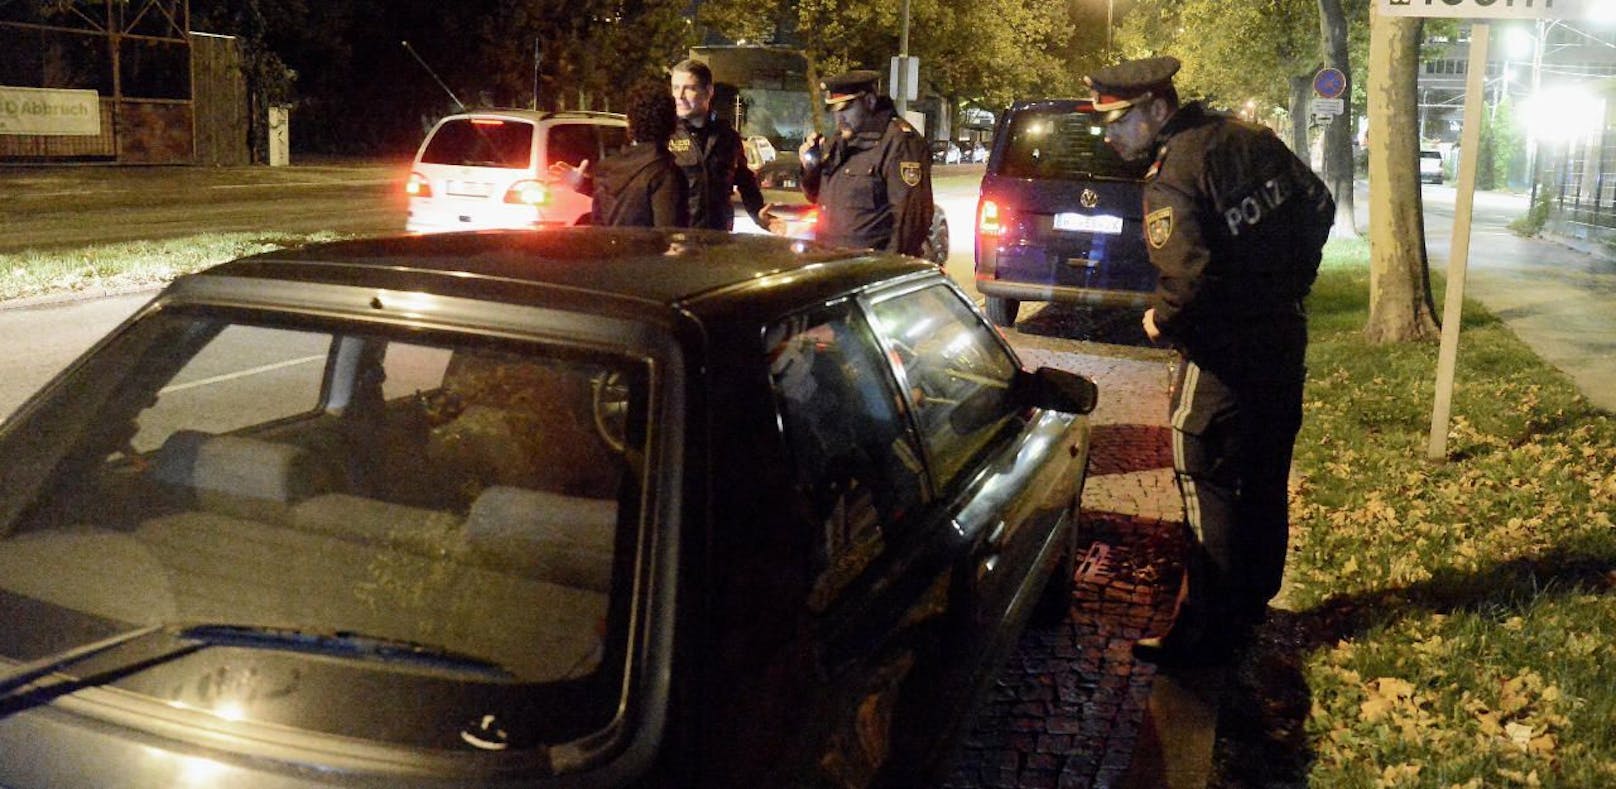 Die Polizei stoppte den BMW-Lenker